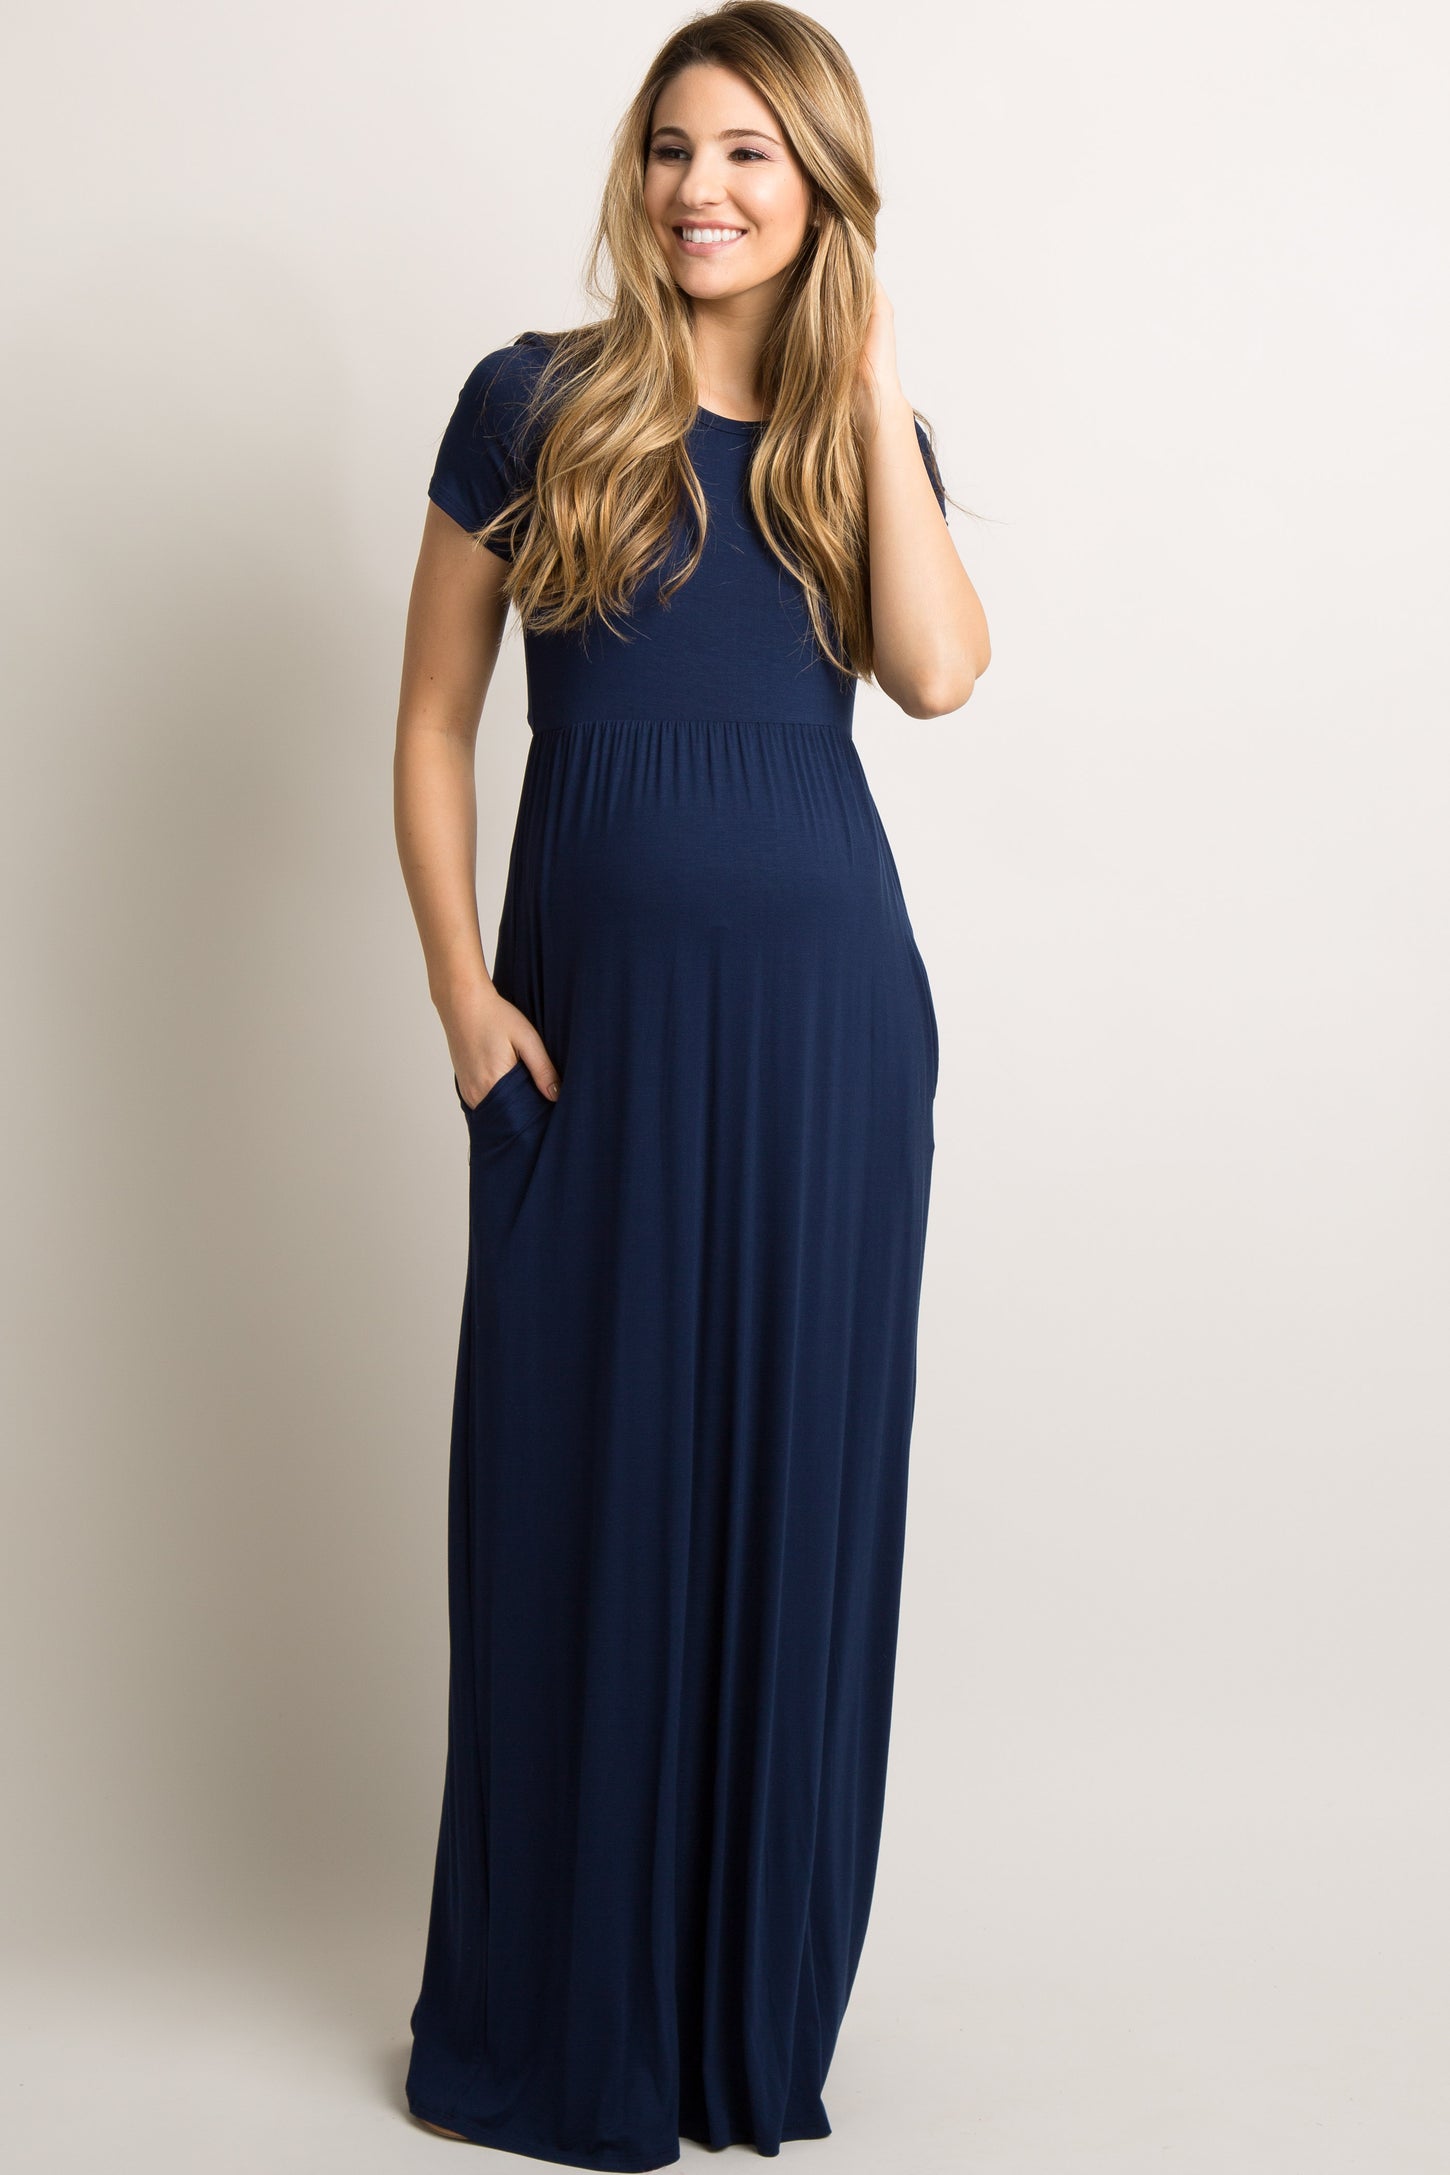 Navy Blue Solid Side Pocket Maternity Maxi Dress